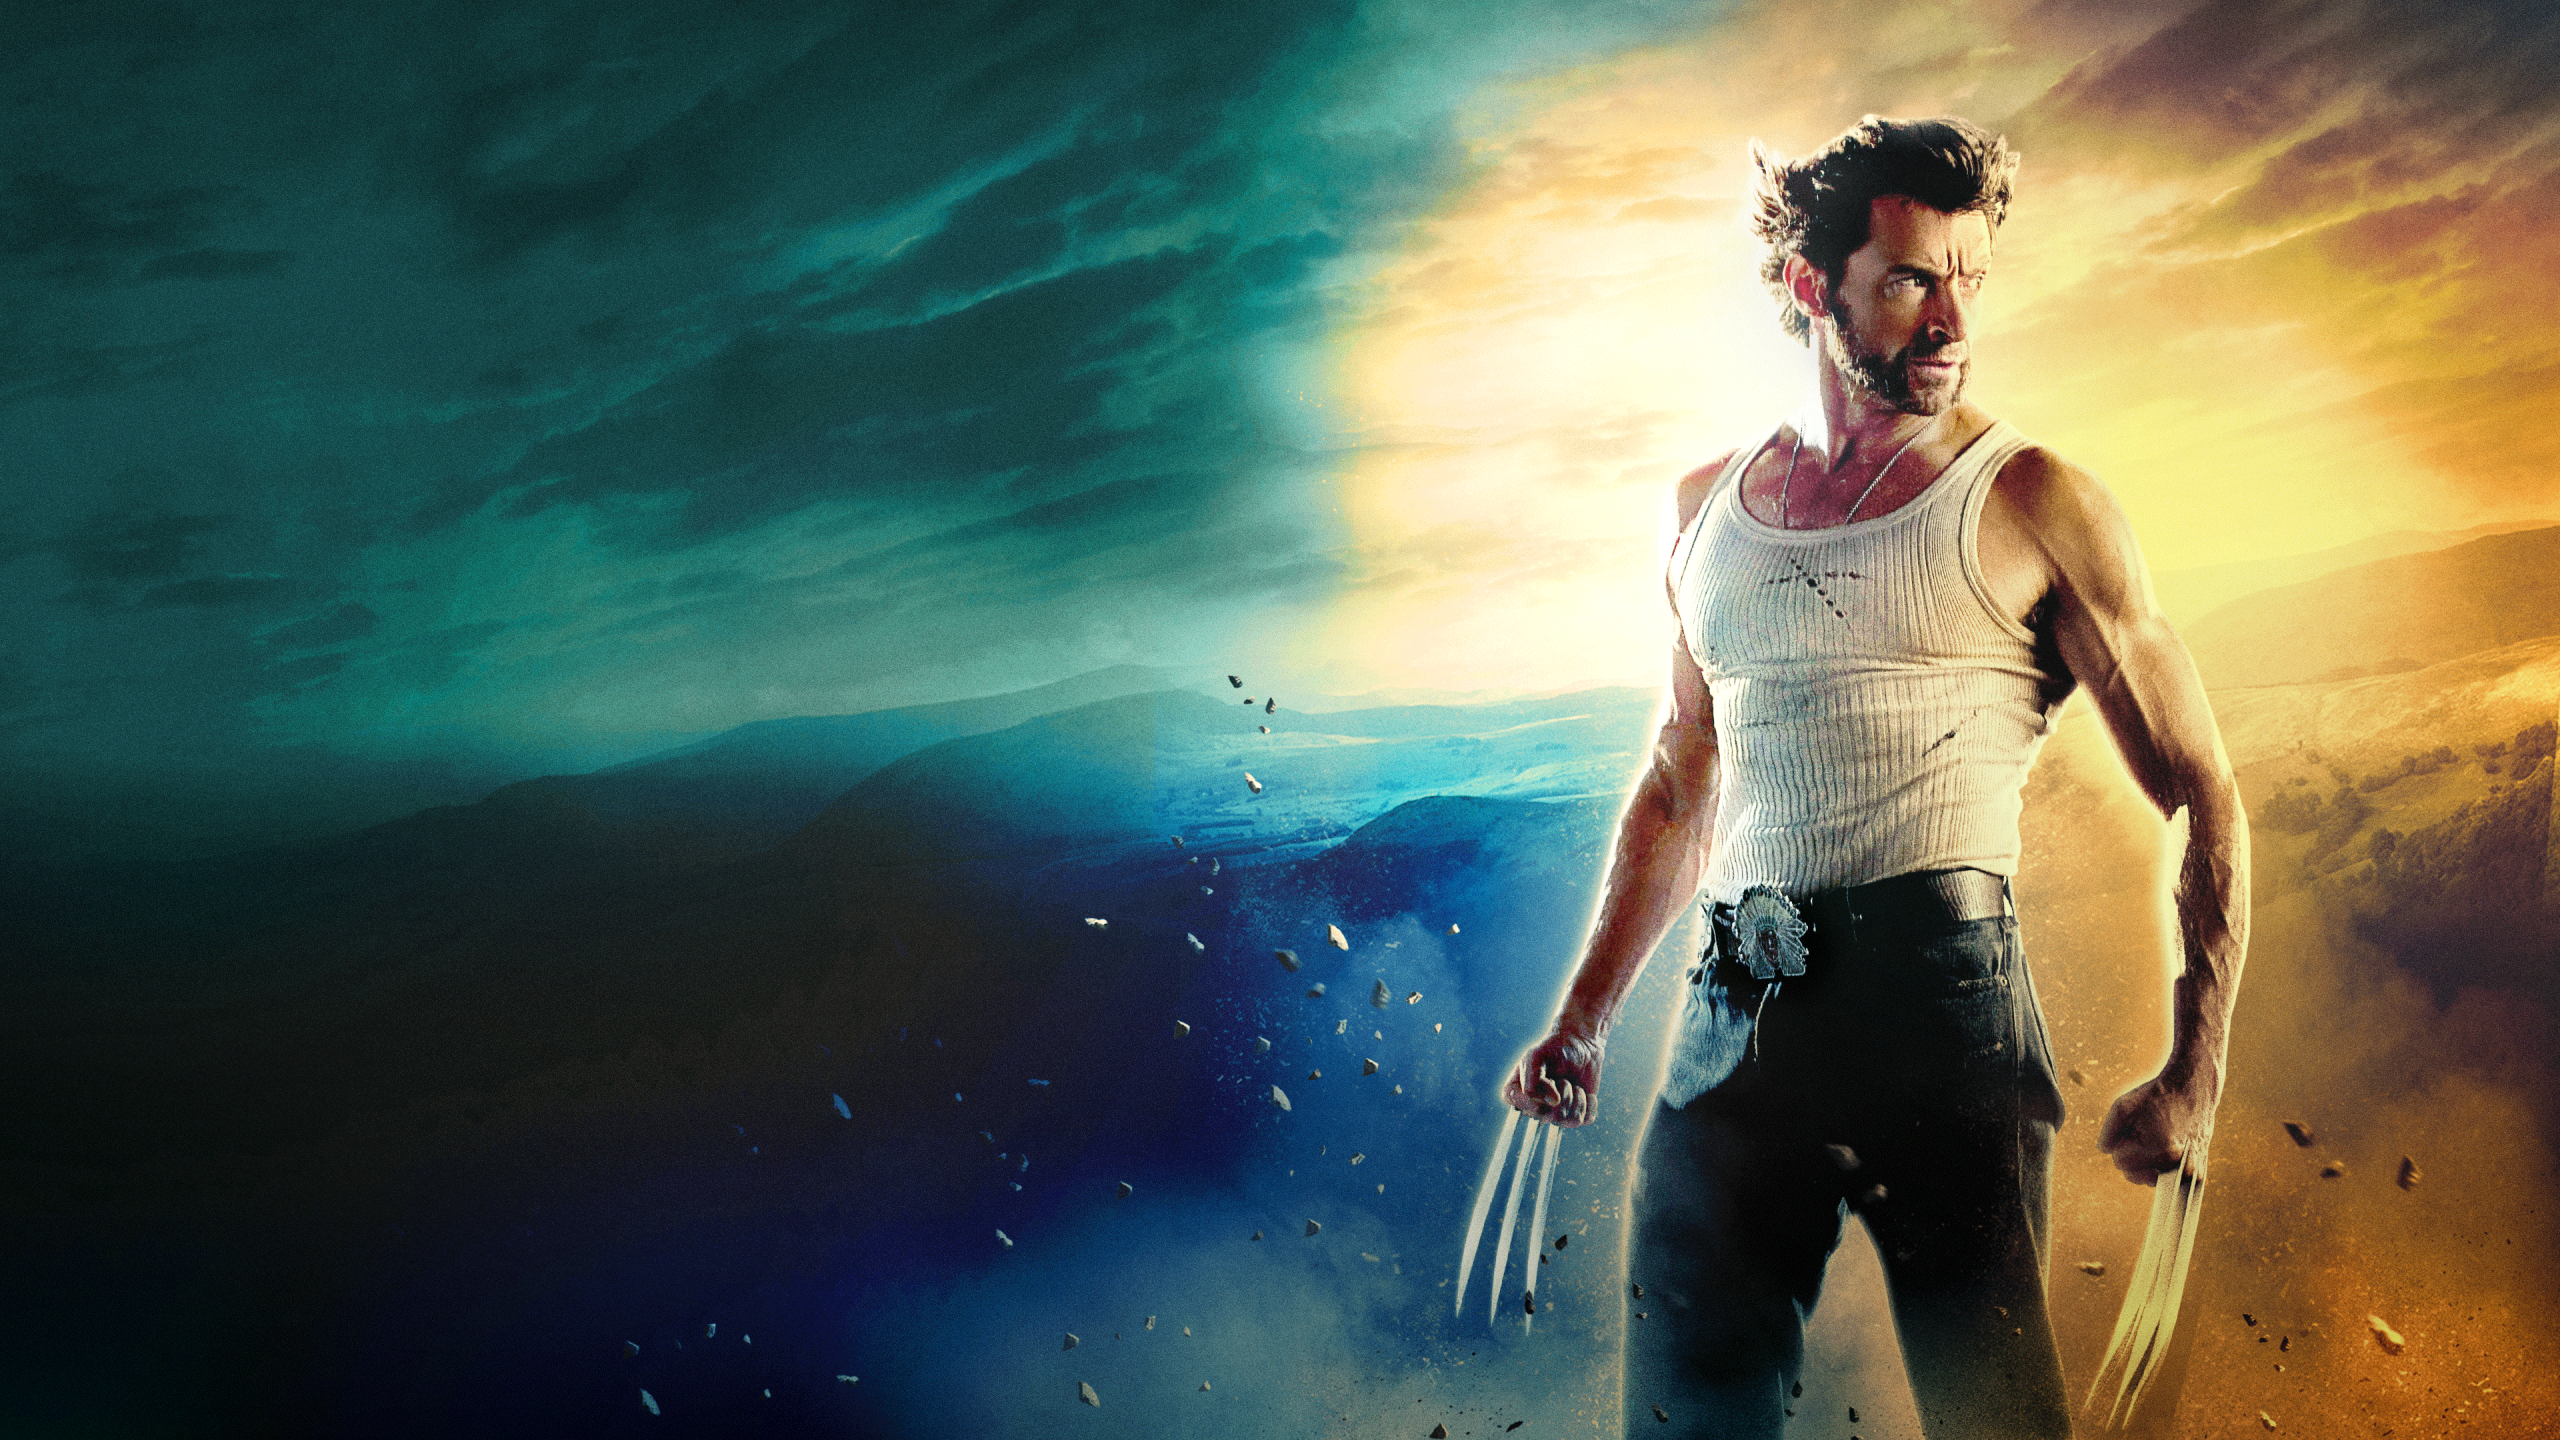 X Men Origins Wolverine - HD Wallpaper 